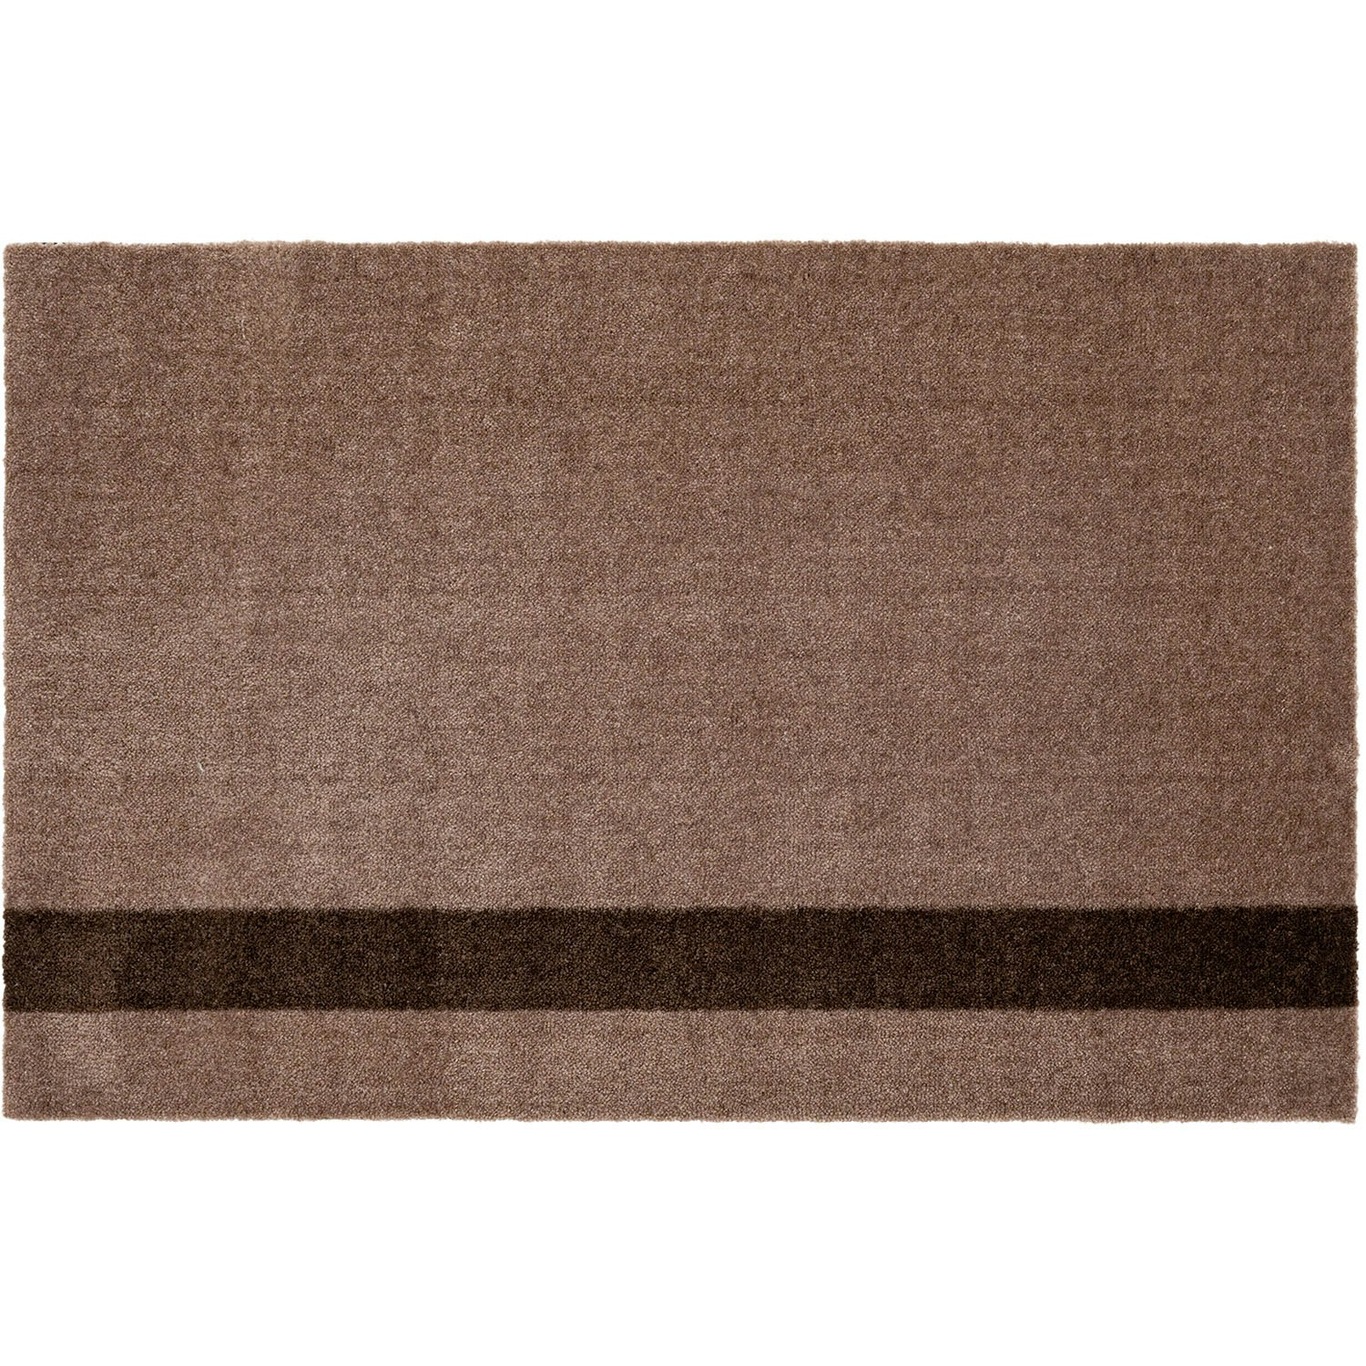 Stripes Teppich Vertikal Sandfarben/Braun, 60x90 cm